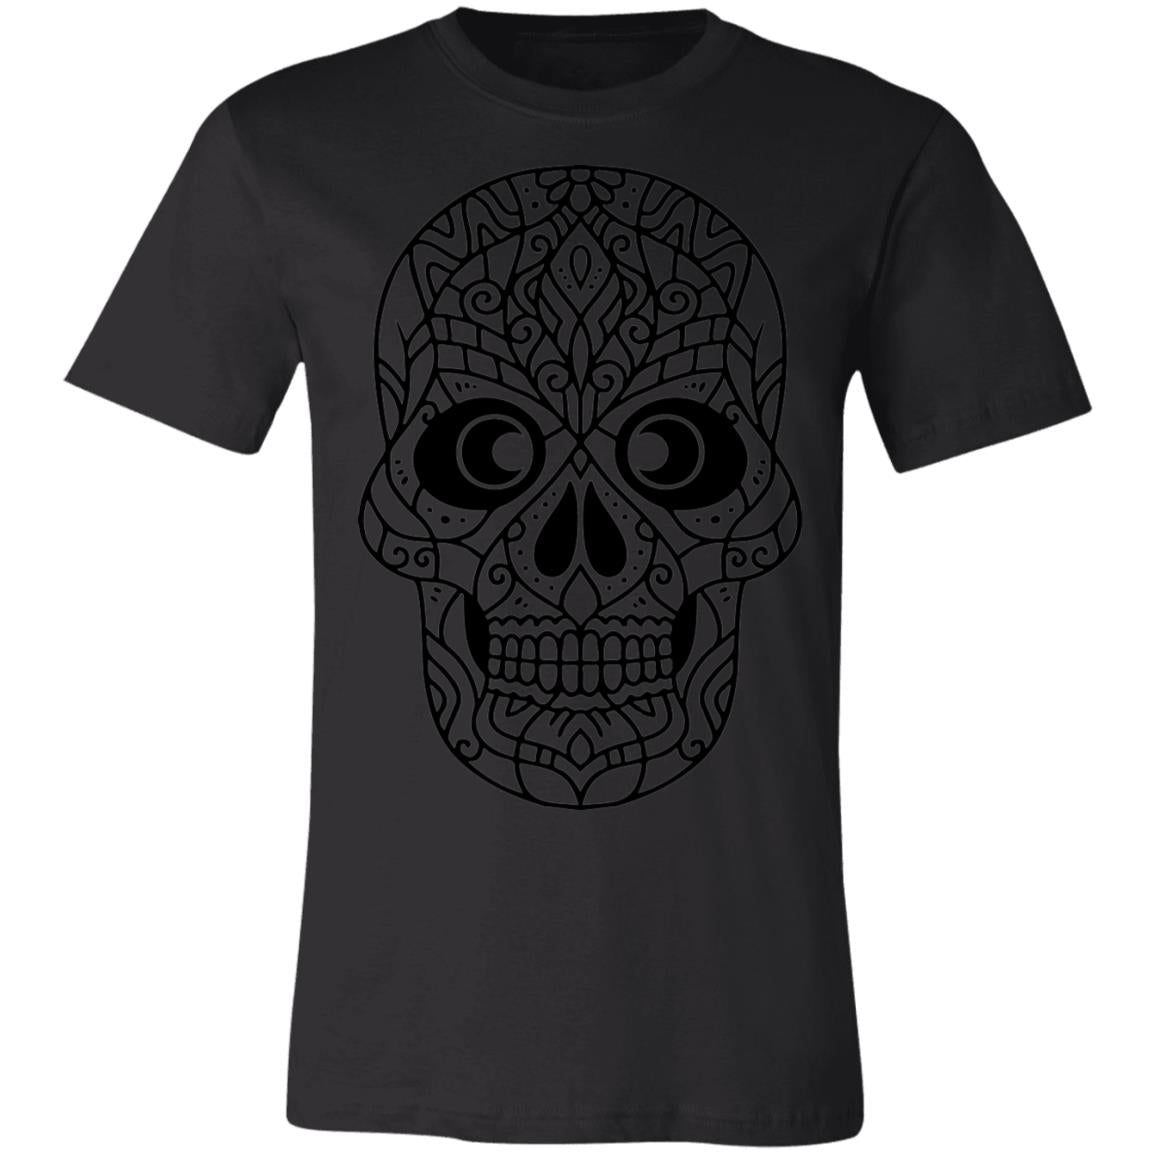 Skull 104 Santa Muerte Shirt-Express Your Love Gifts